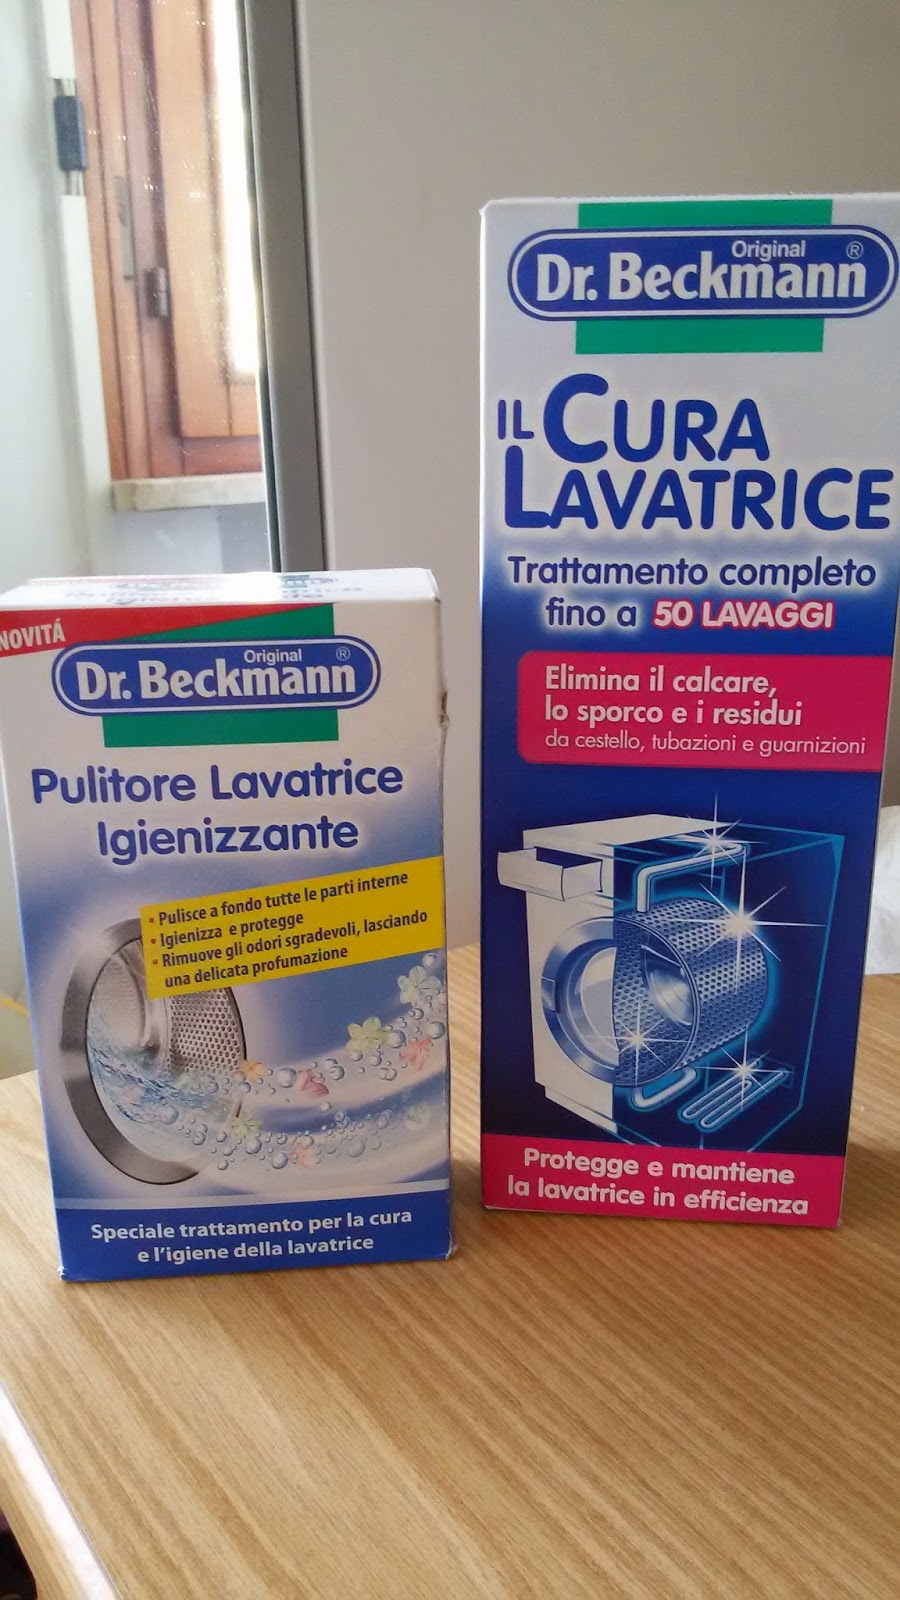 Ale Beauty Express: Review: Dr. Beckmann Pulitore Lavatrice Igienizzante